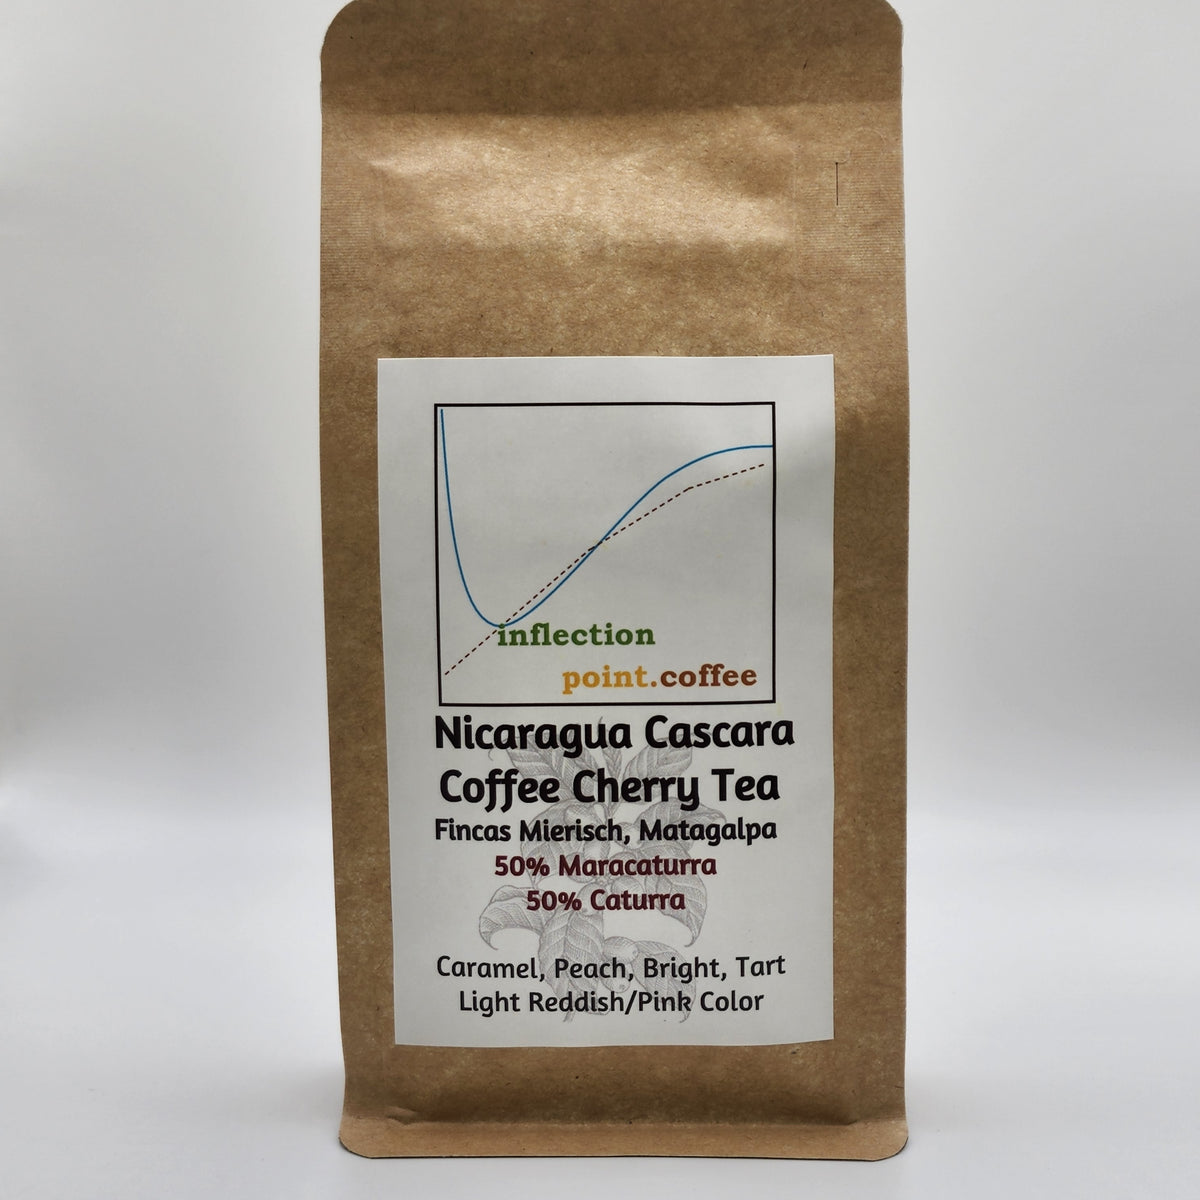 Nicaragua Cascara - Coffee Tea– Inflection Point Coffee